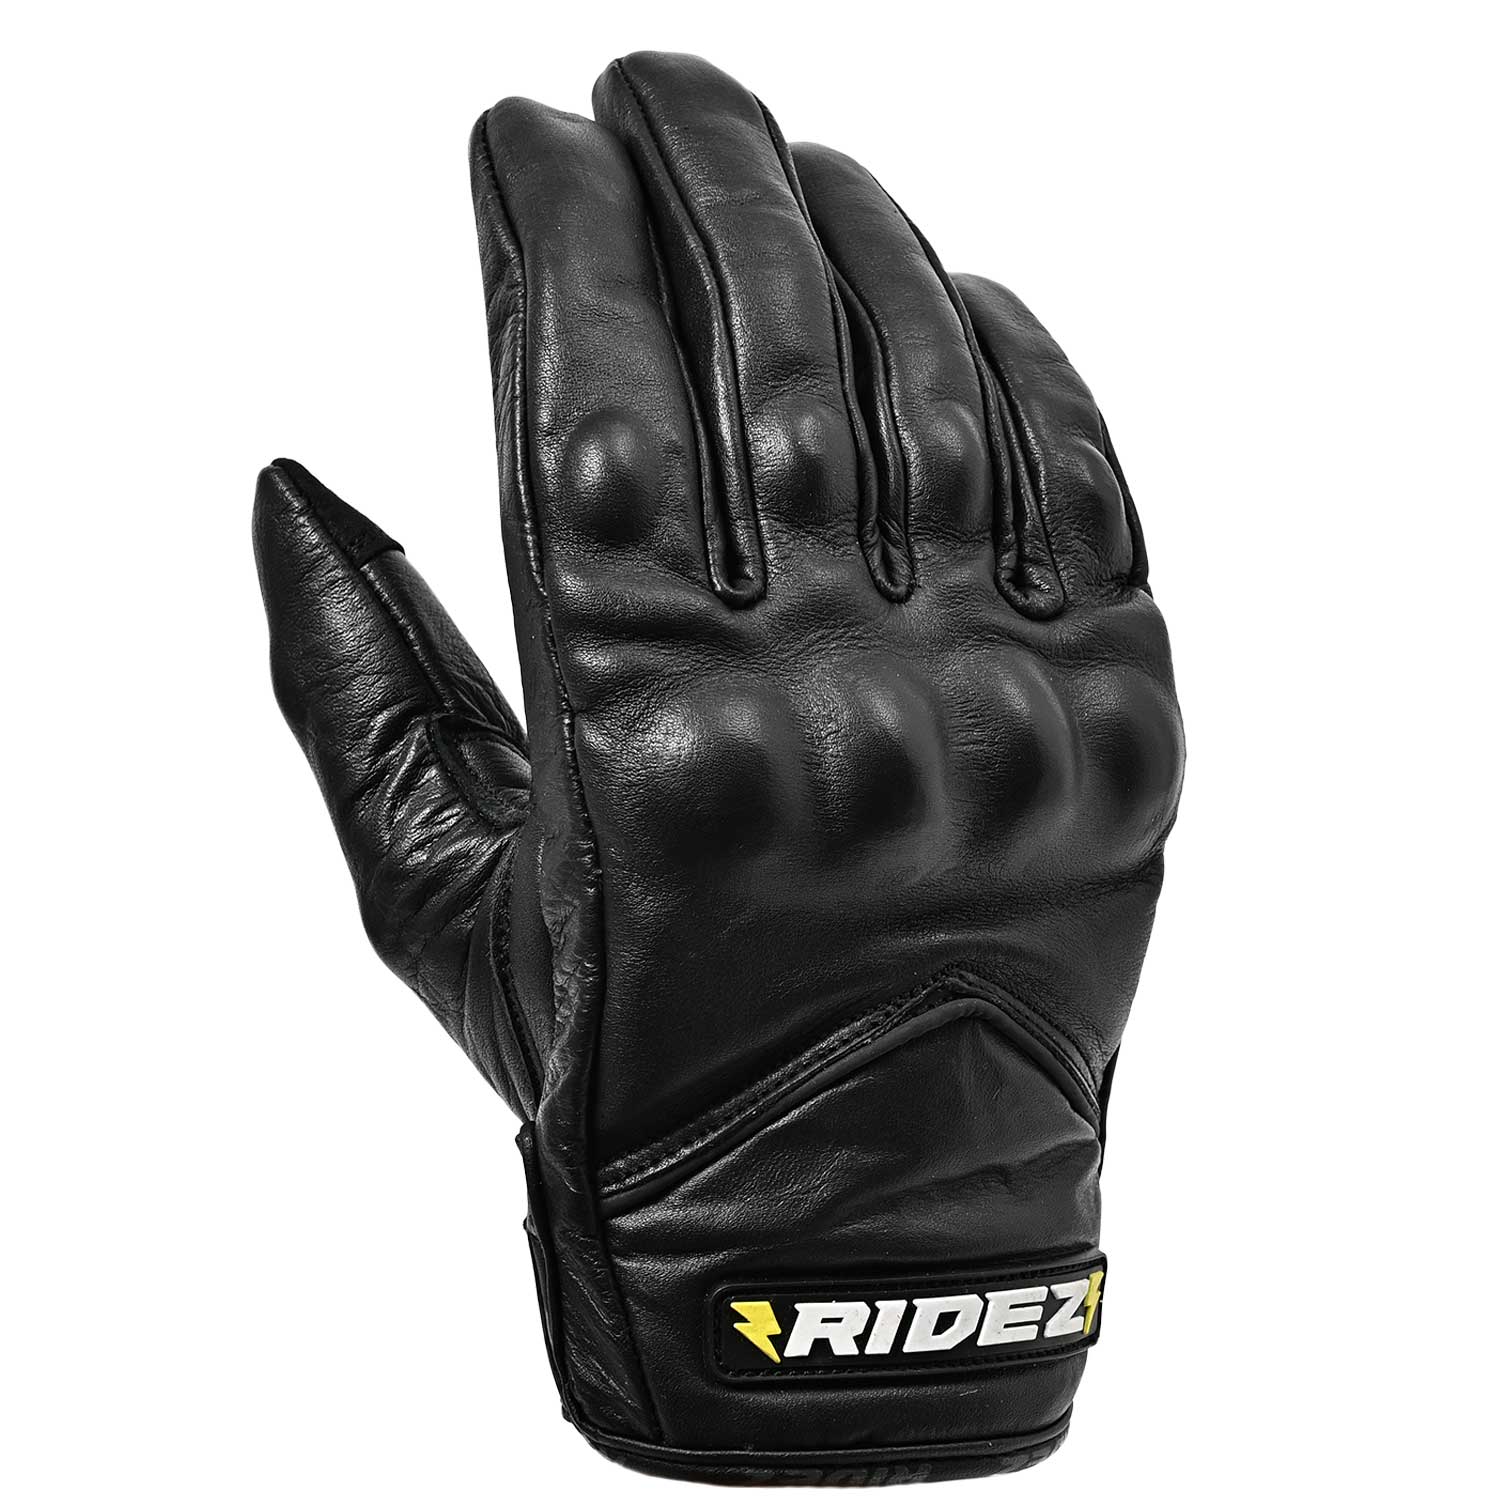 RIDEZ AXION 手套黑色 RLG261 真皮摩托车手套